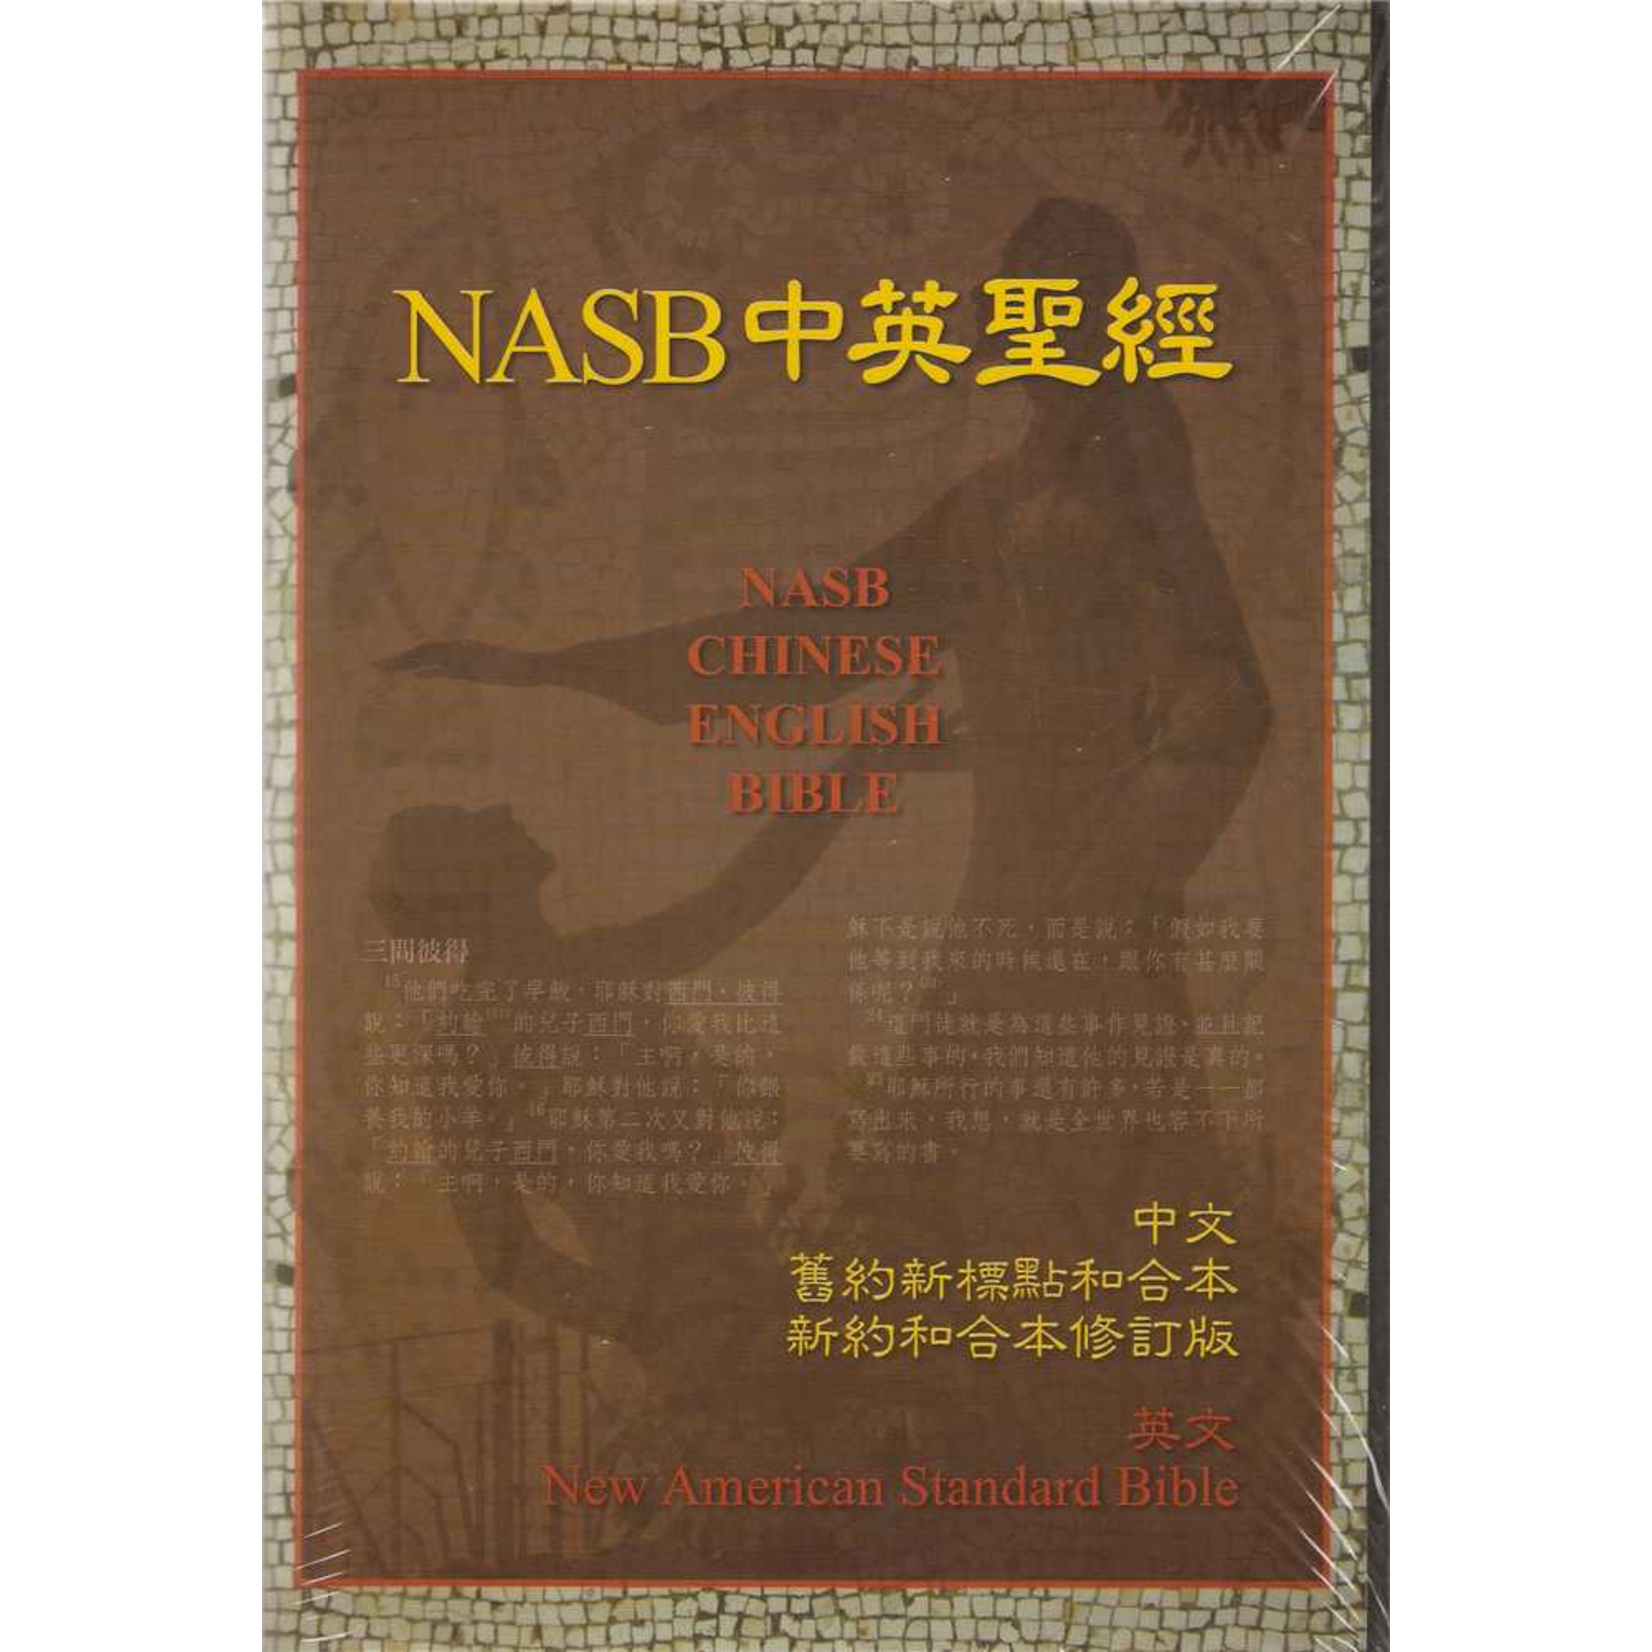 美國書念人書房 Shunammite Book House NASB 中英聖經 NASB CHINESE ENGLISH BIBLE（斷版）